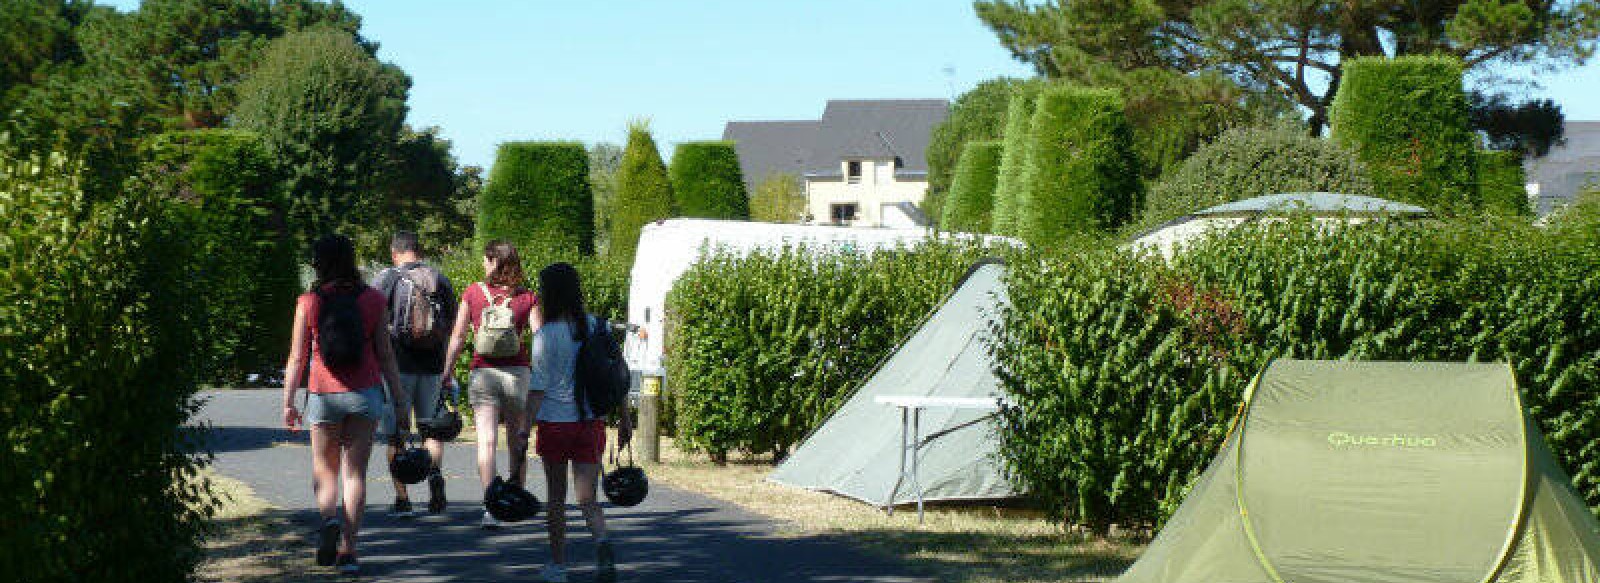 Camping Municipal - Les Mouettes